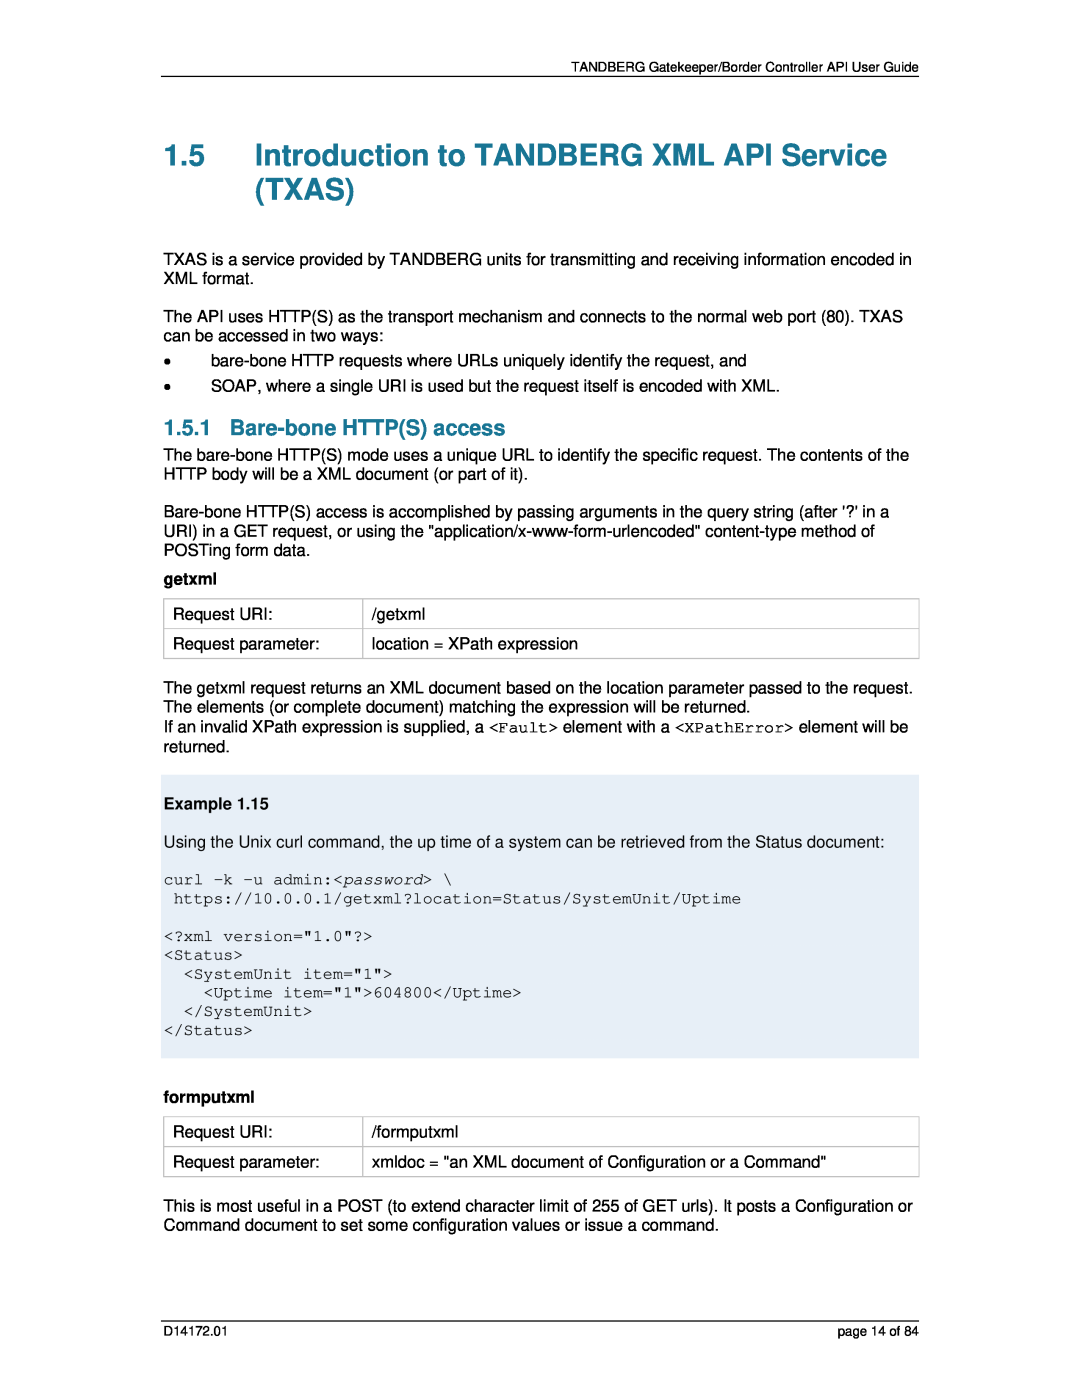 TANDBERG D14172.01 Introduction to TANDBERG XML API Service TXAS, Bare-bone HTTPS access, getxml, formputxml, Example 